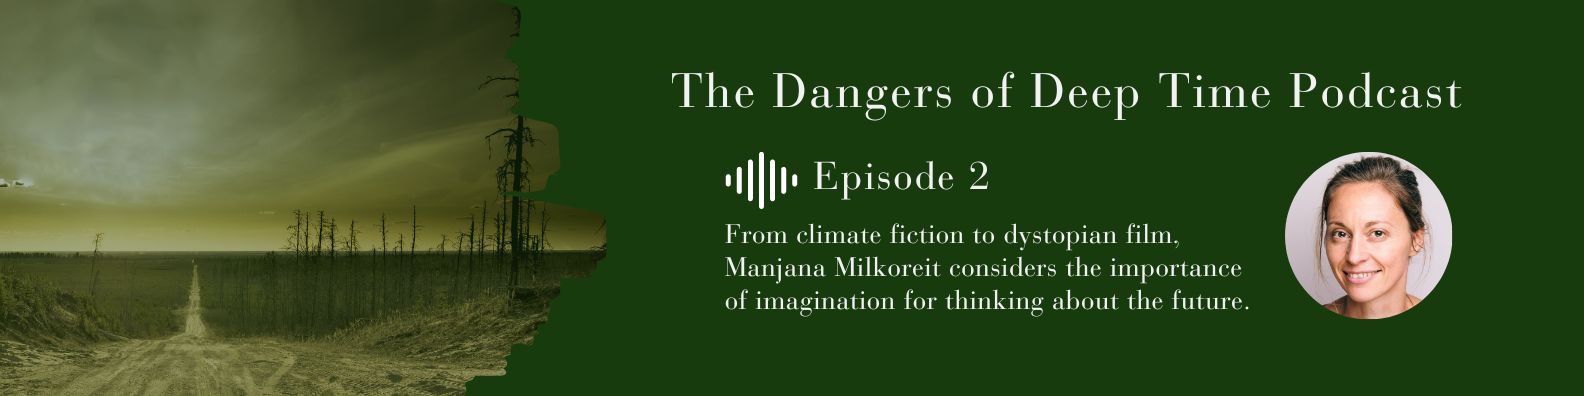 Dangers of Deep Time Podcast Episode 2 Milkereit